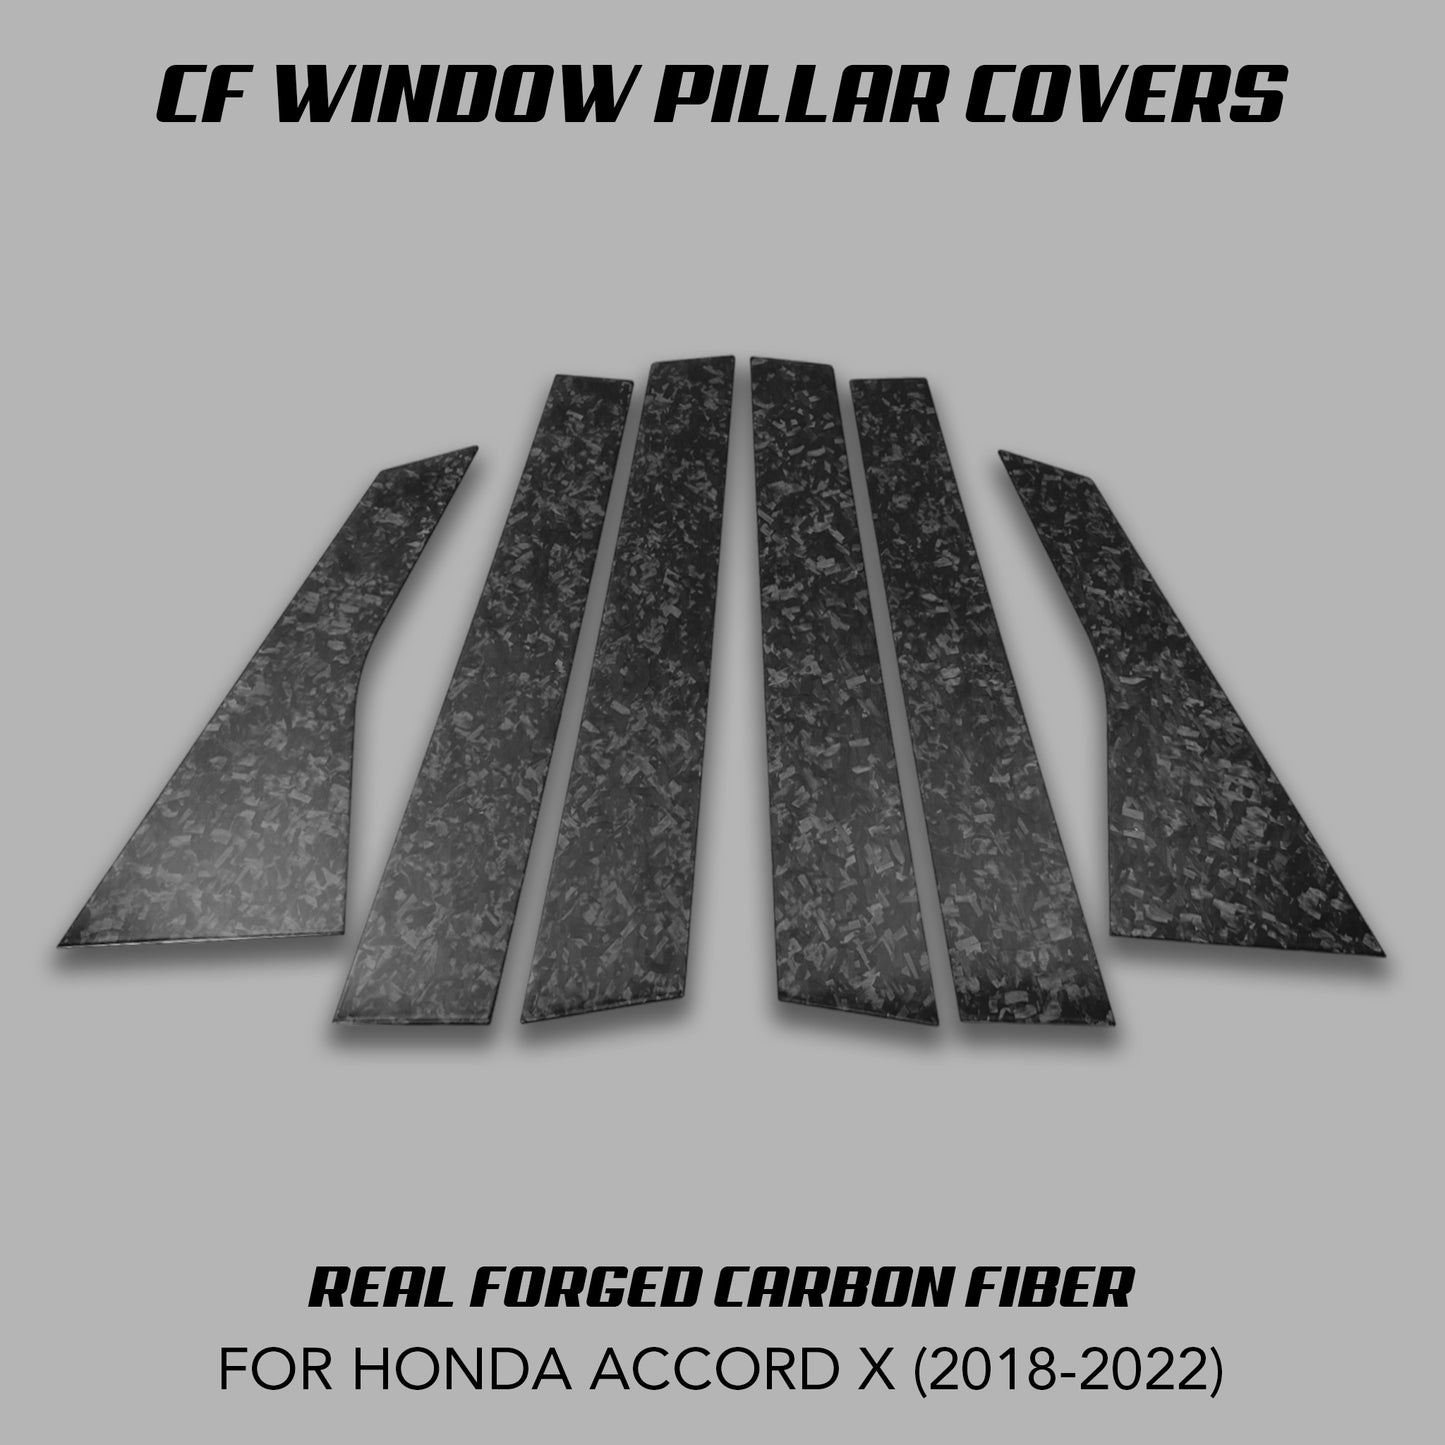 [ACCORD X] REAL CARBON FIBER WINDOW PILLAR COVERS